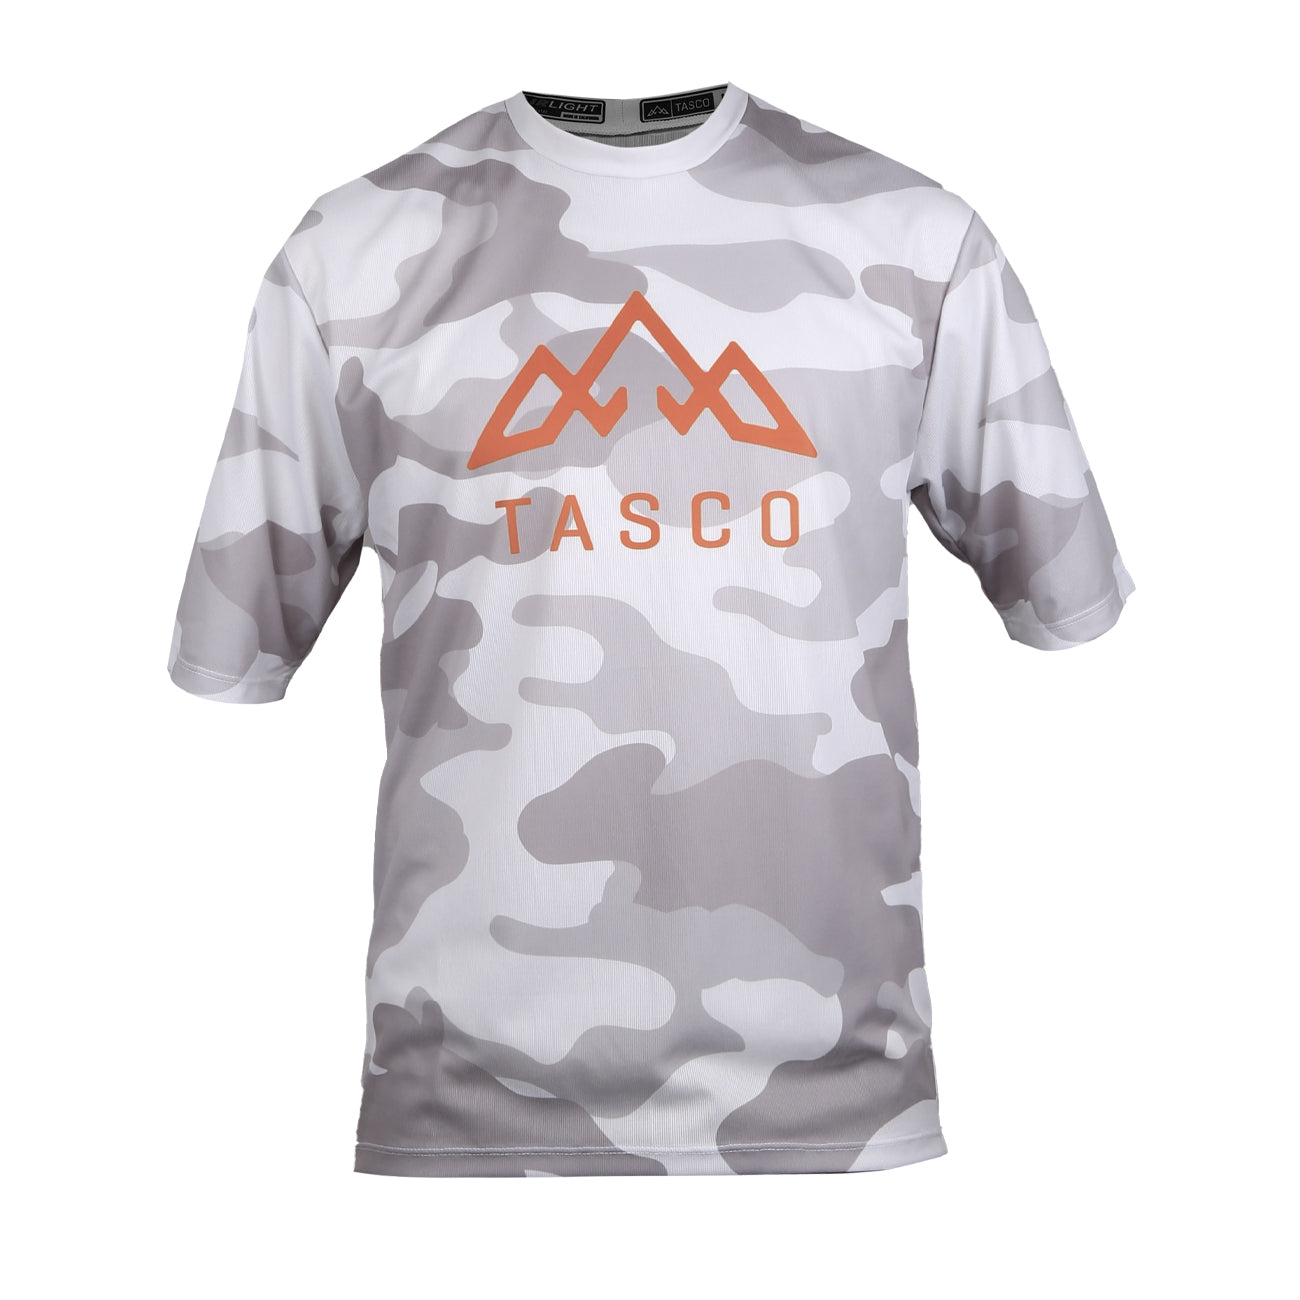 TASCO MTB Trail Jersey Short Sleeve White Camo woth orange TASCO logo